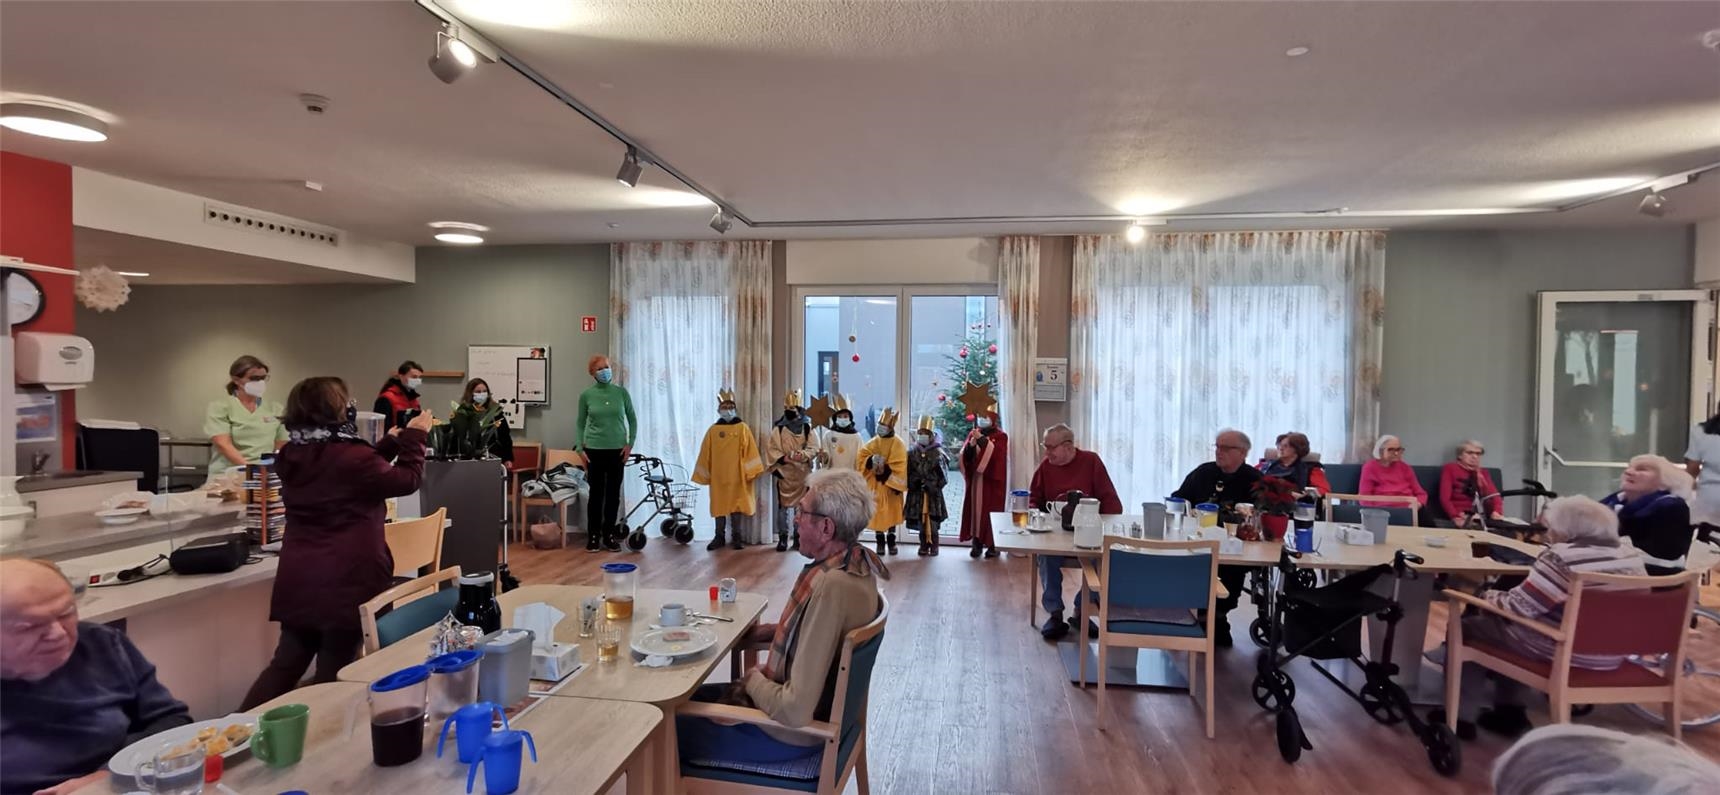 Sternsinger in der Pflege im Roteux-Quartier (Caritasverband für den Landkreis Emmendingen e.V.)